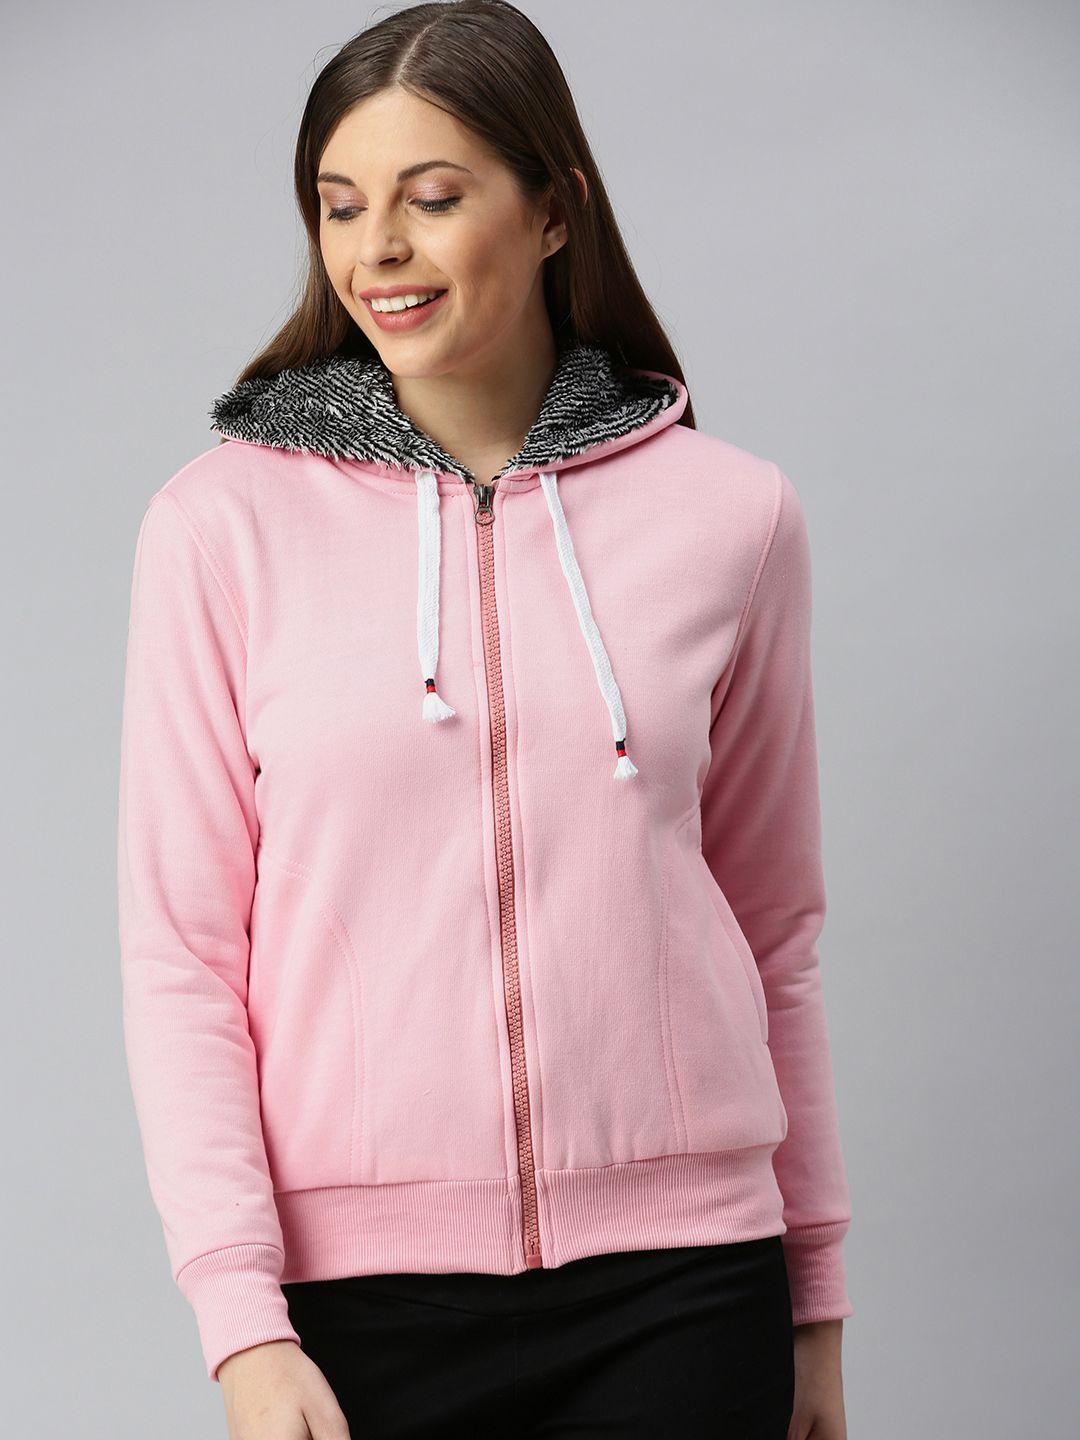 adbucks women pink solid hooded sweatshirt